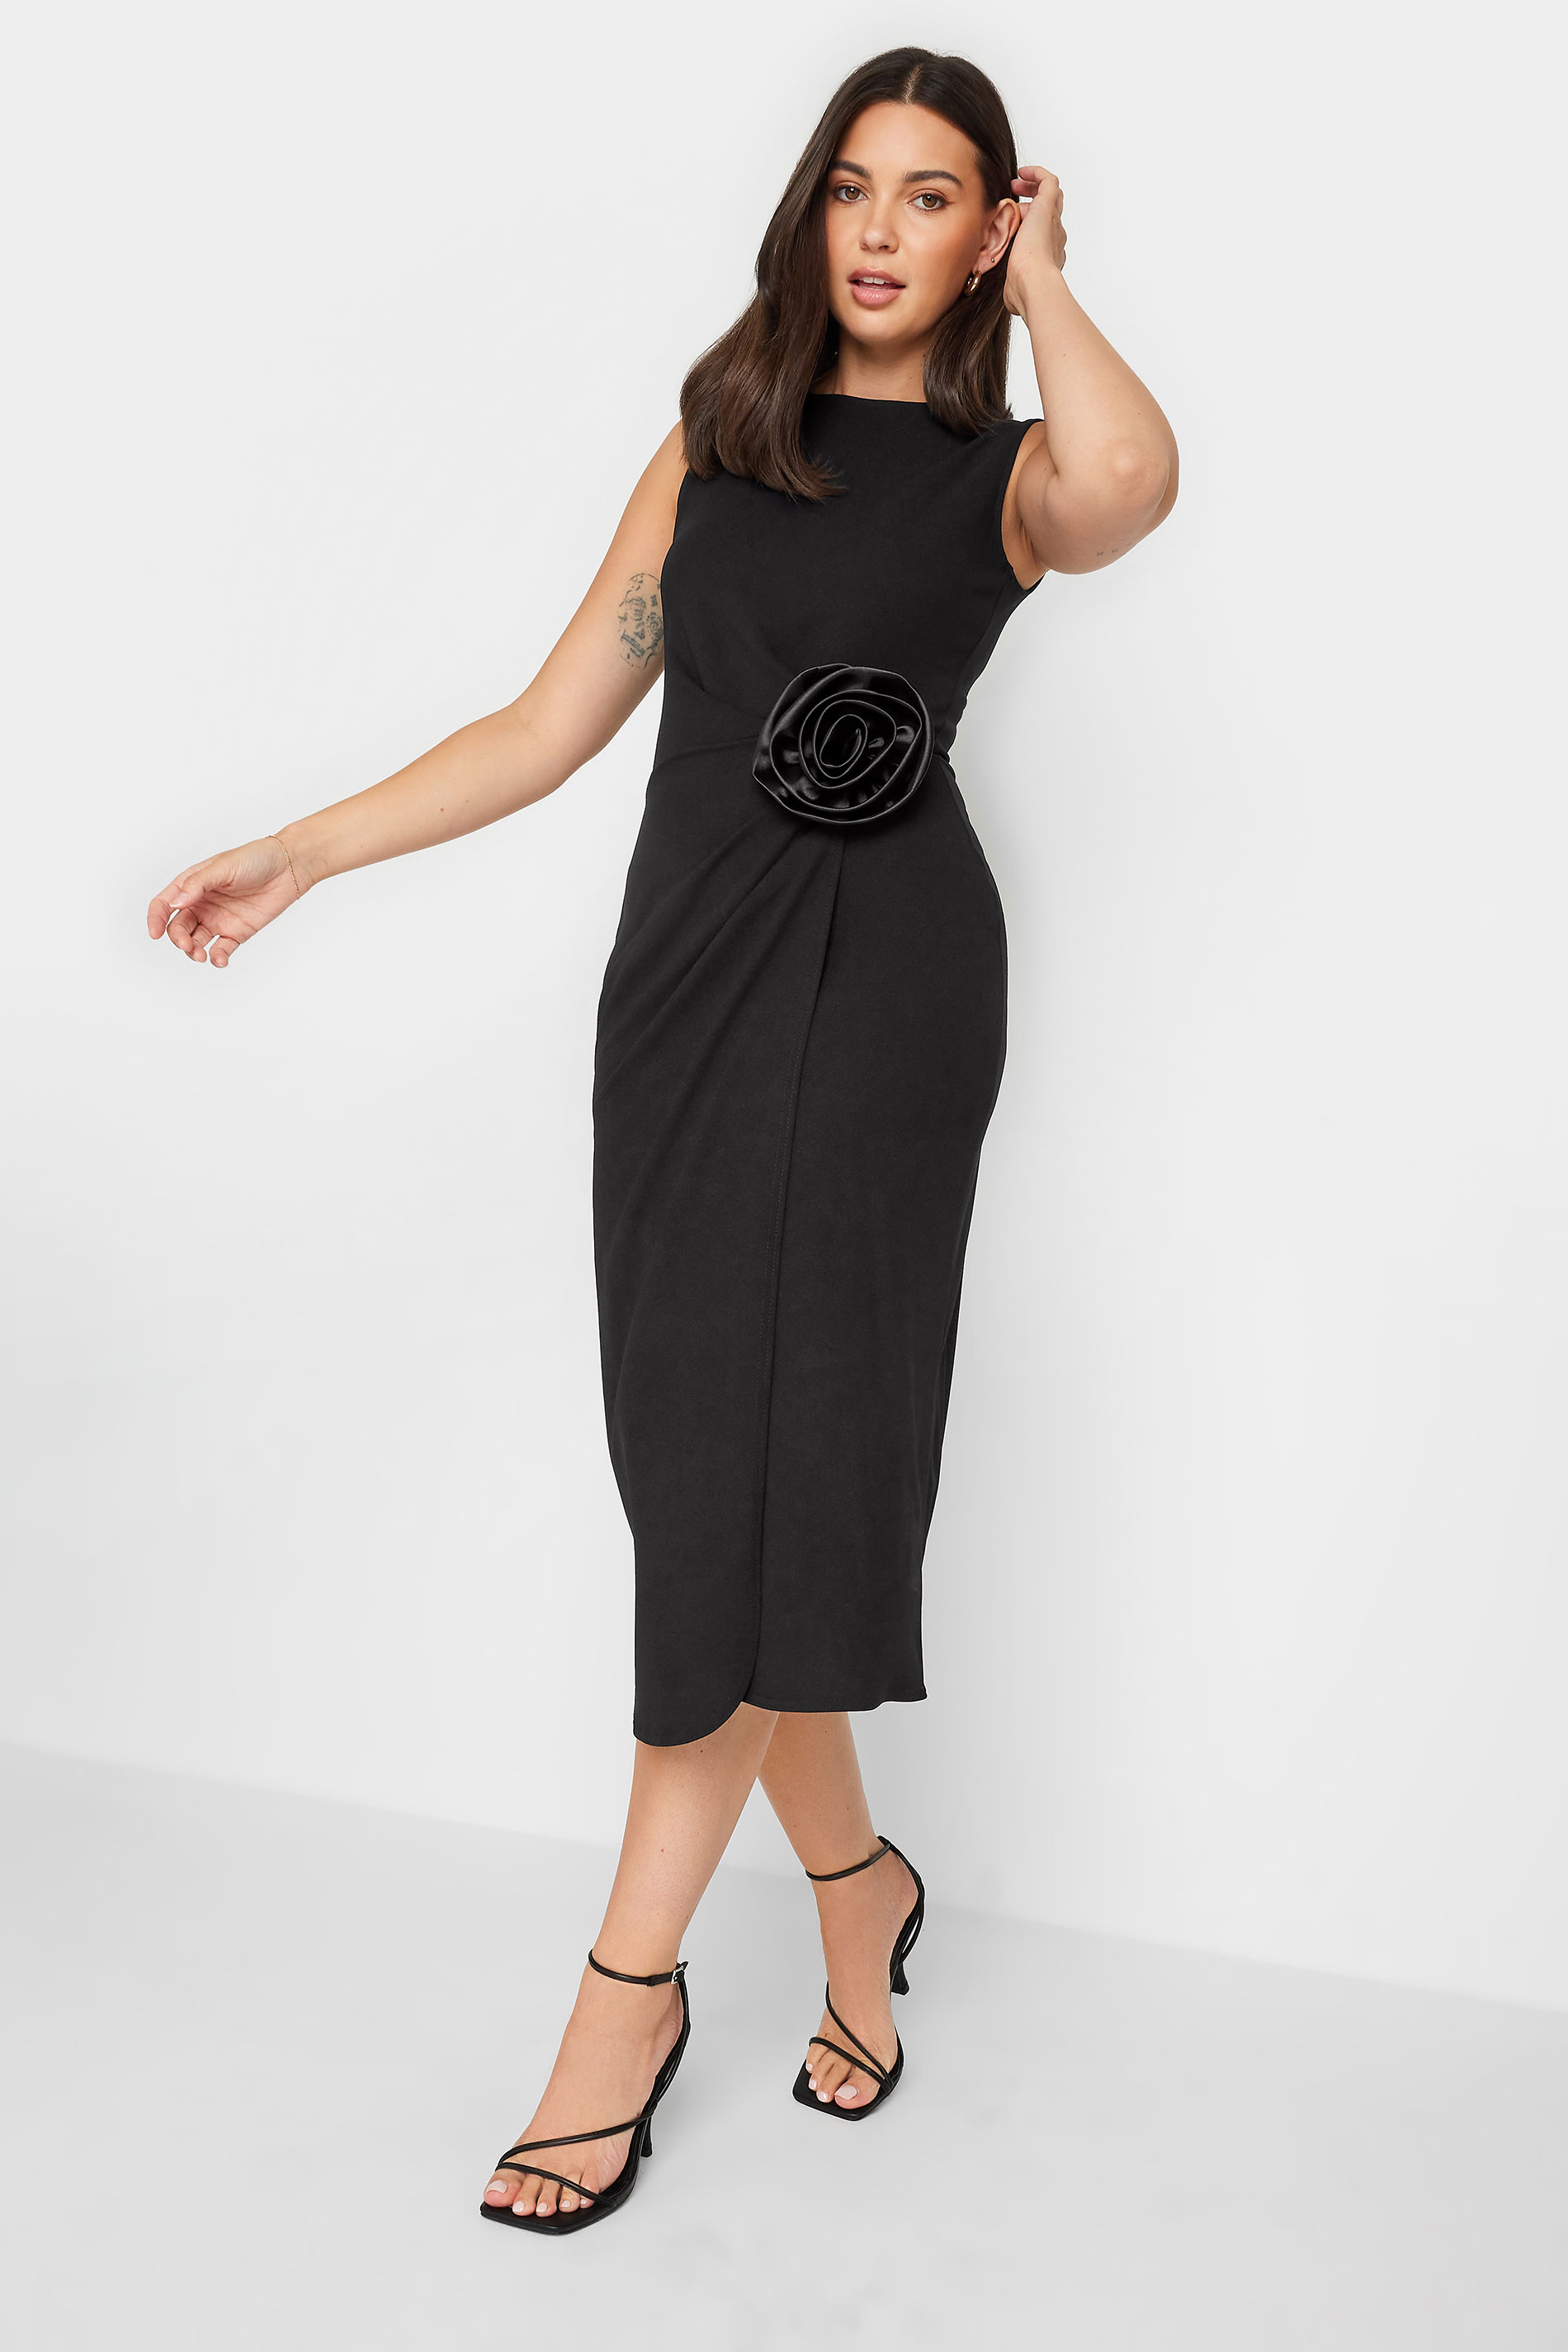 LTS Tall Women's Black Rose Detail Midi Dress | Long Tall Sally 2